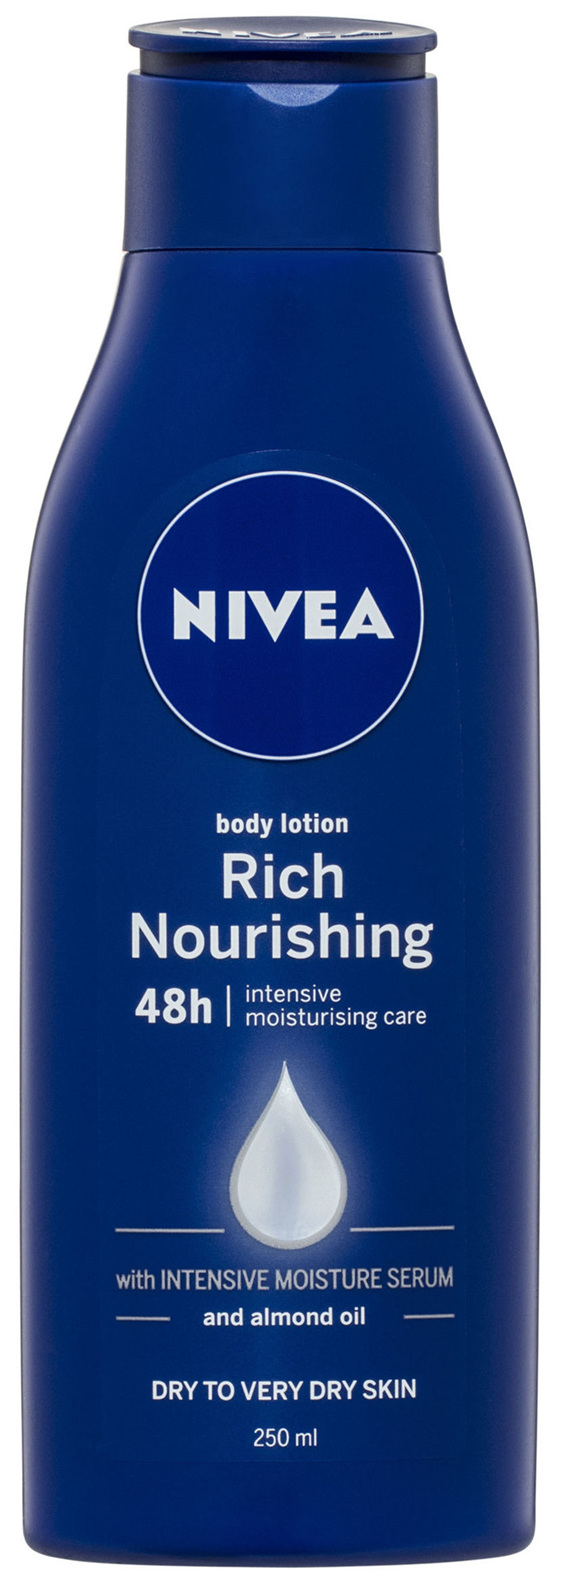 NIVEA Rich Nourishing Body Lotion